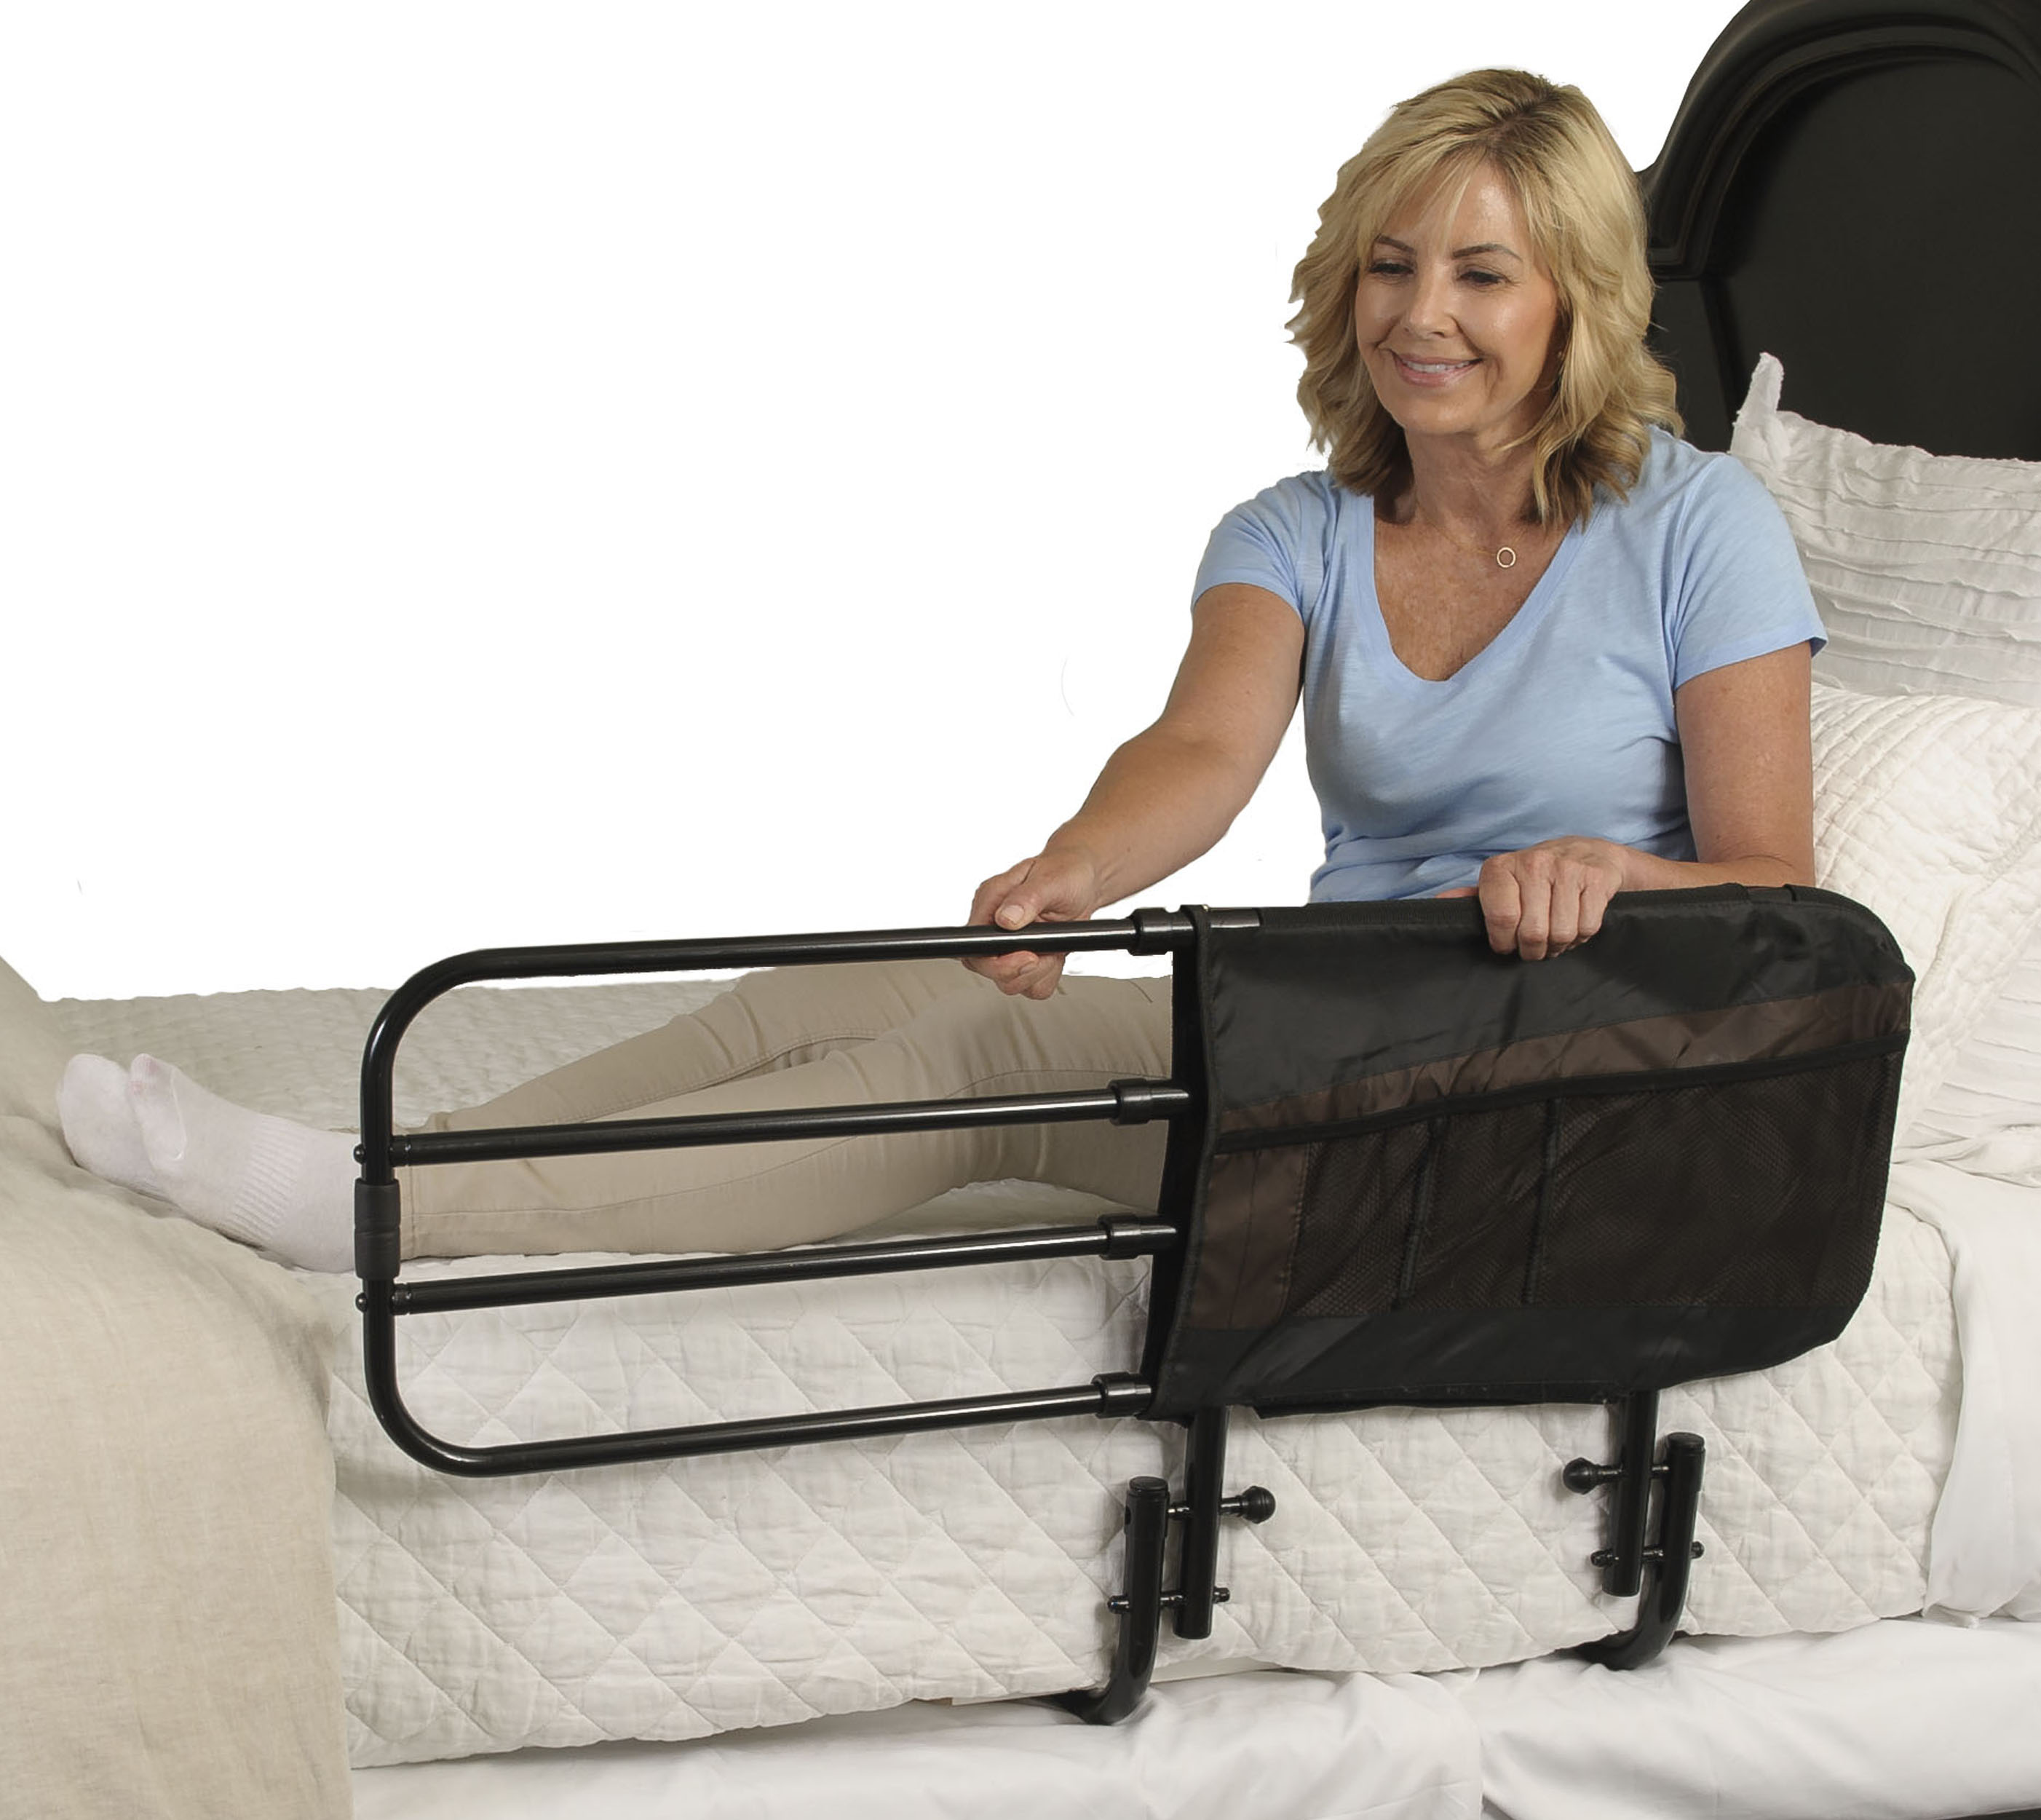 Equate Adult Bed Rails For Elderly Assistance Bed Hand Rails Bed Safety Rails For Seniors